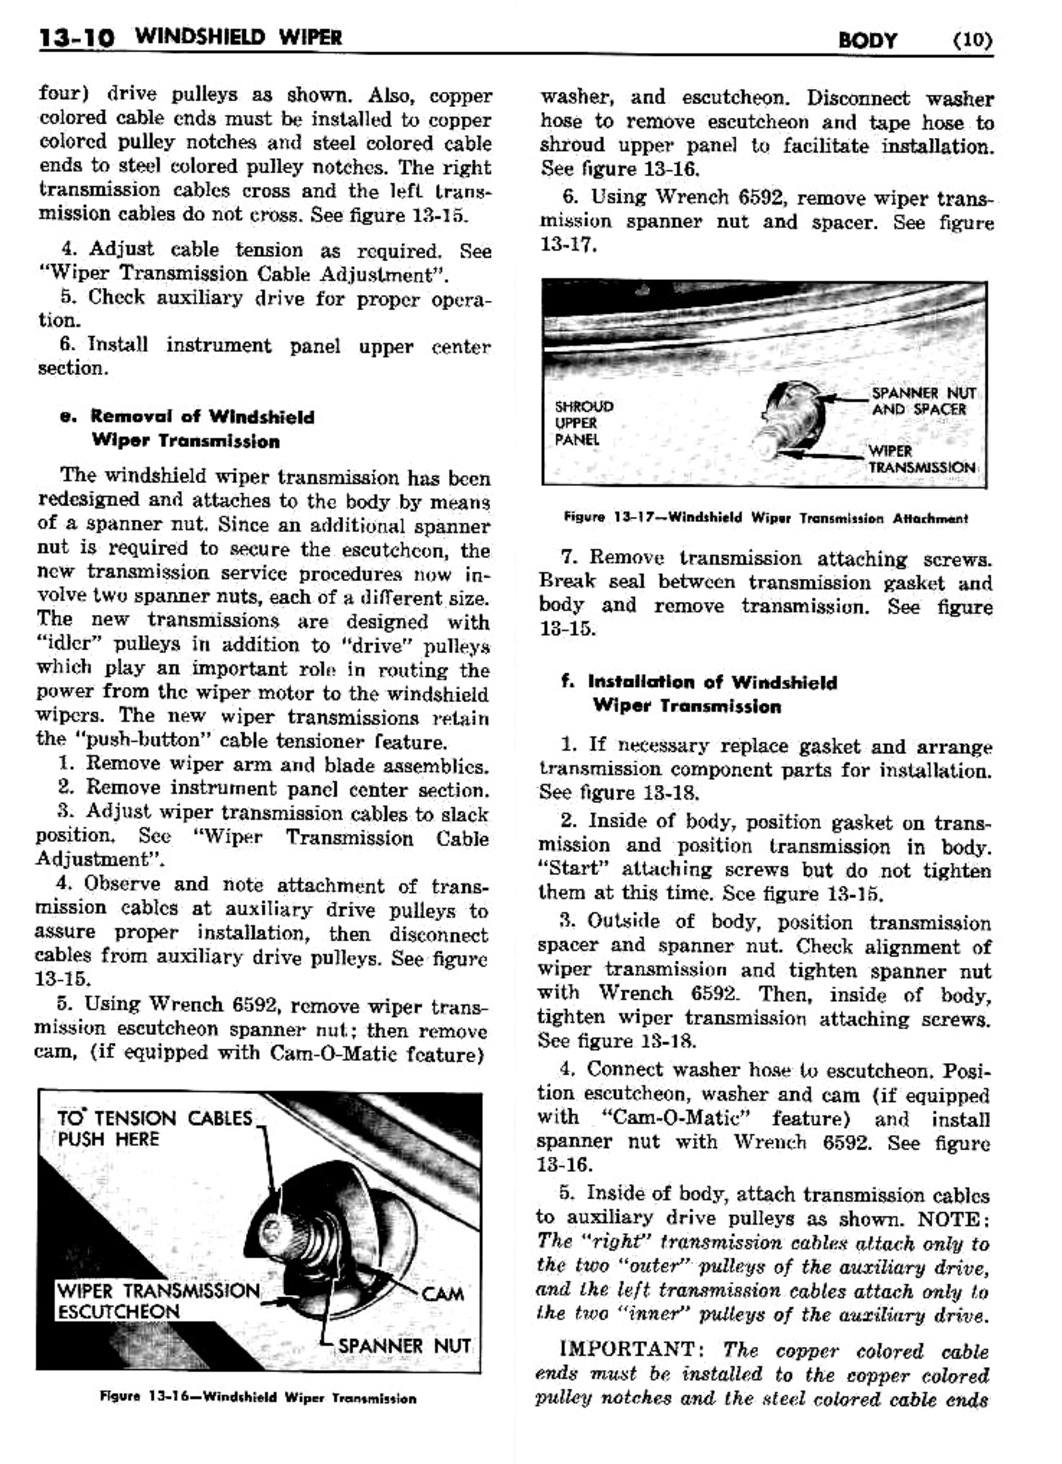 n_1957 Buick Body Service Manual-012-012.jpg